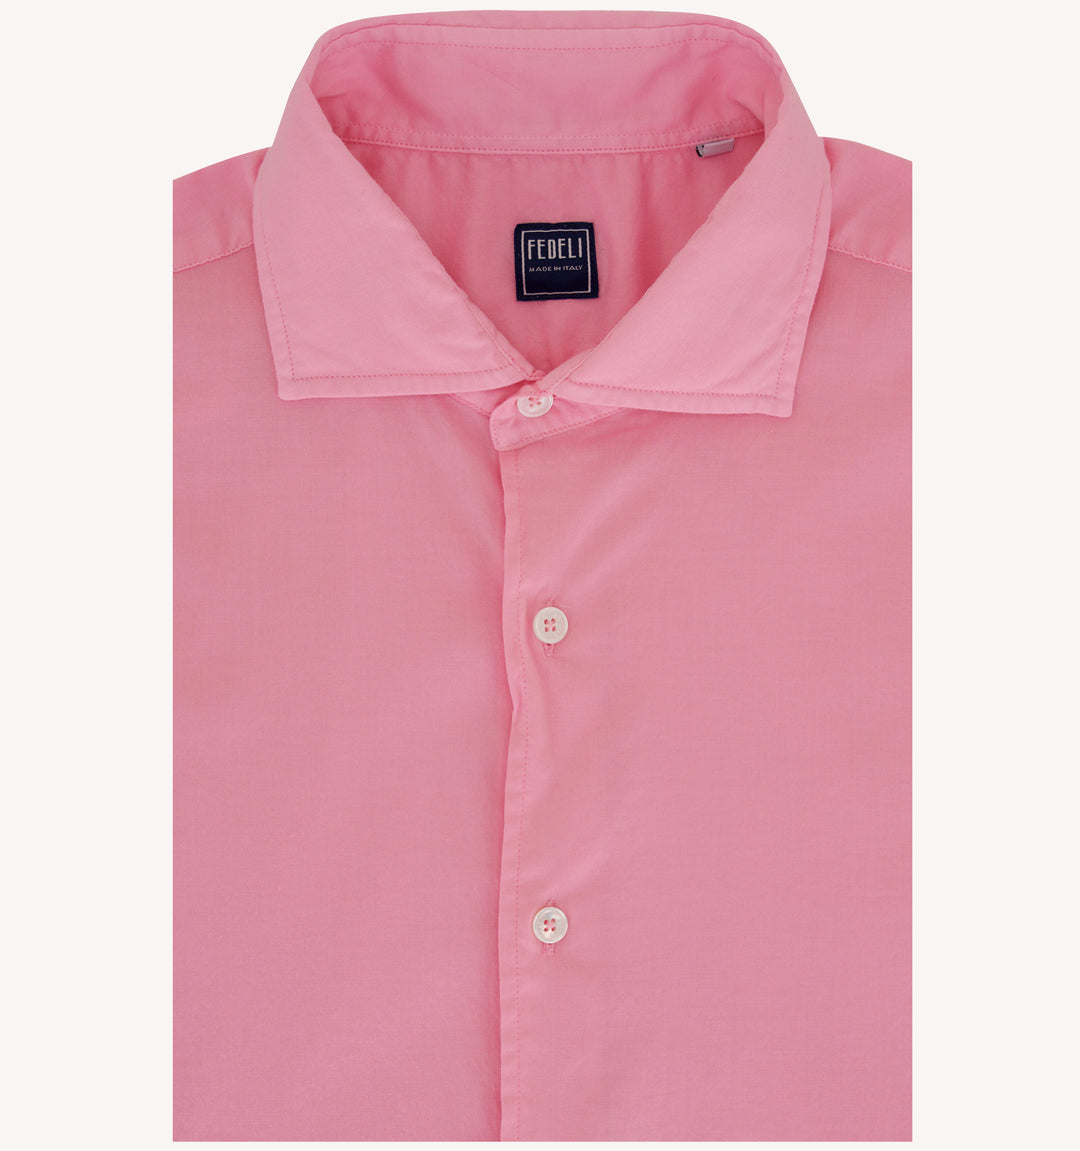 Fedeli Sport Shirt in Pink